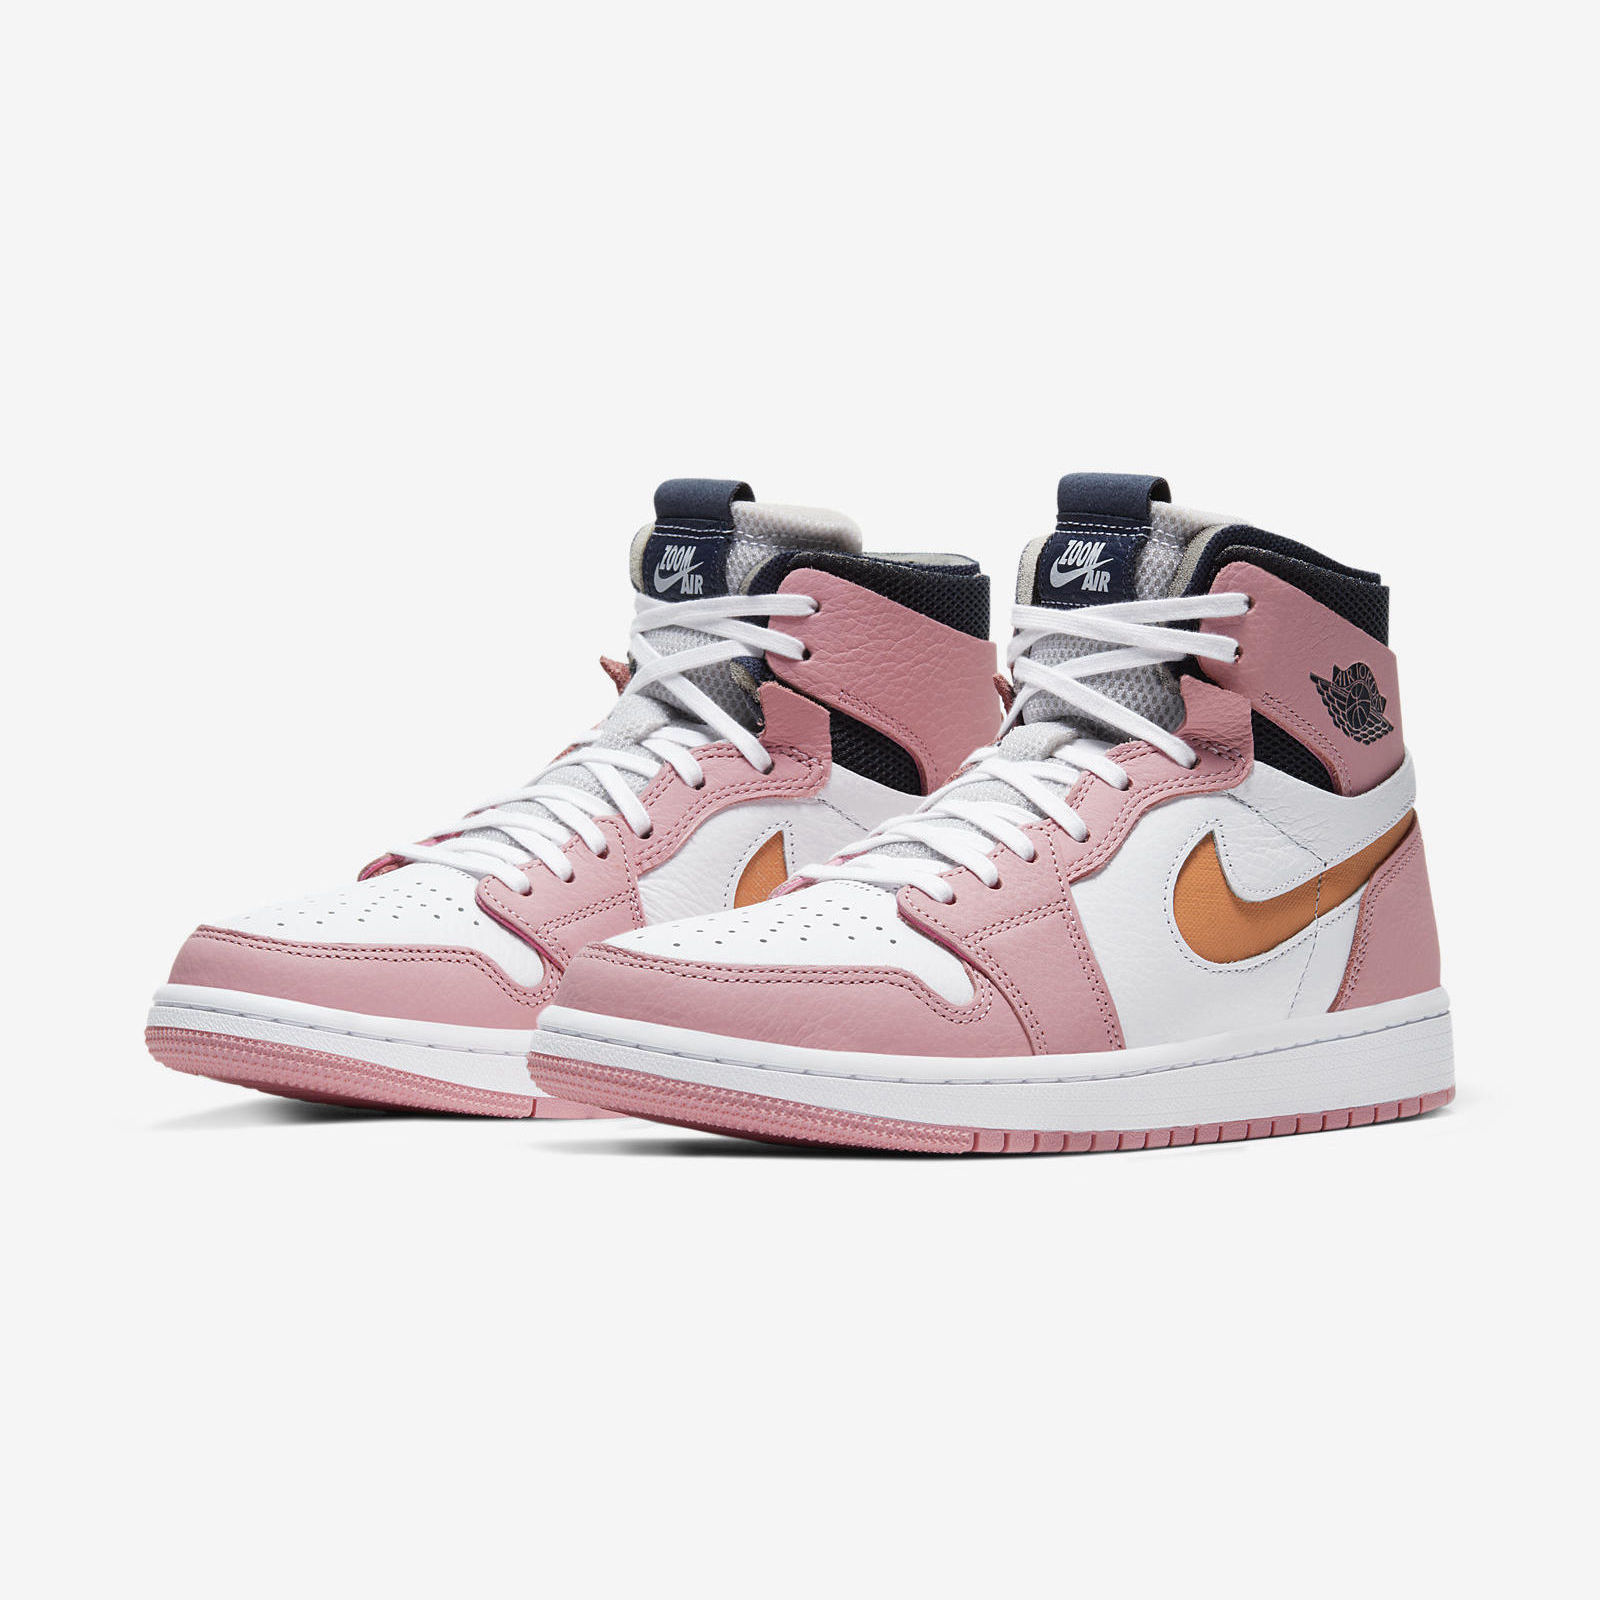 Air Jordan 1 Zoom Comfort
« Pink Glaze »